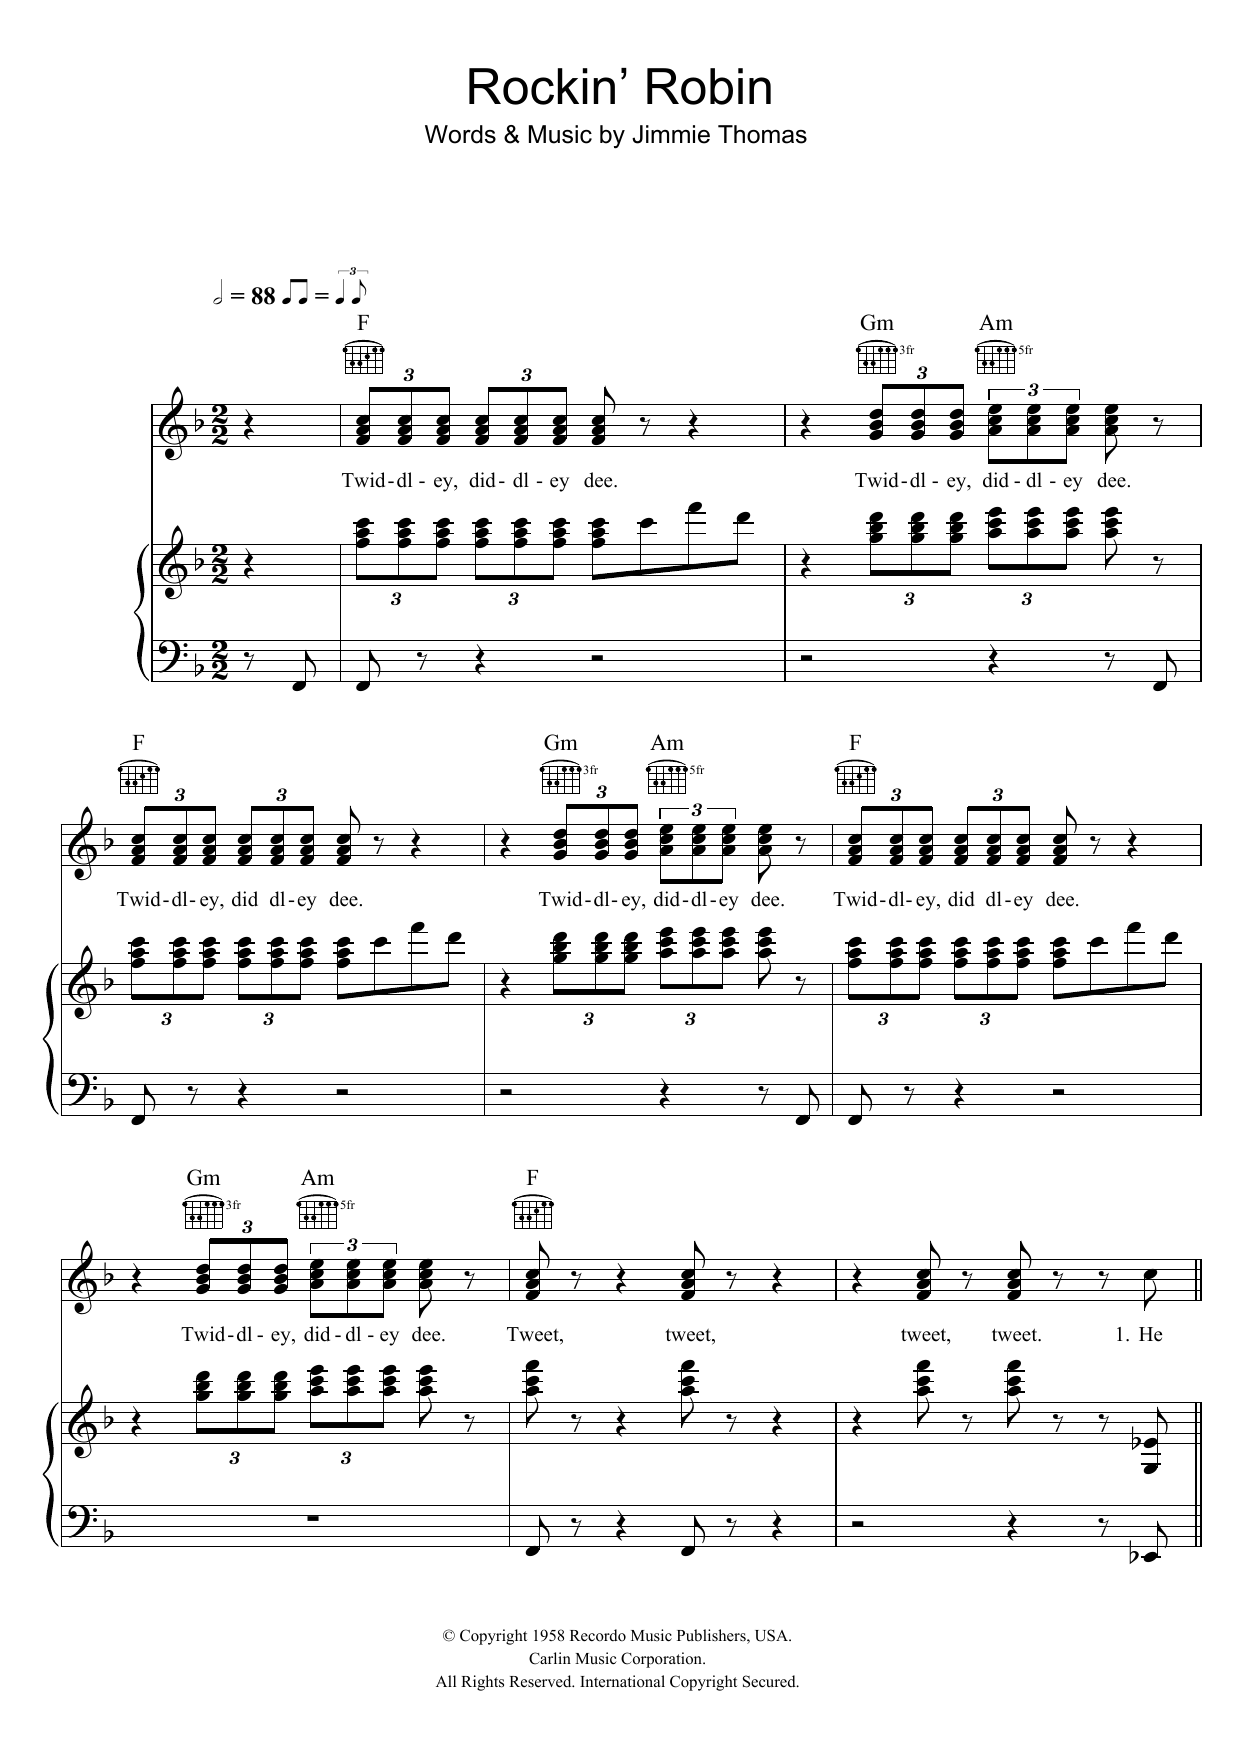 J. Thomas Rockin' Robin Sheet Music Notes & Chords for Trombone - Download or Print PDF